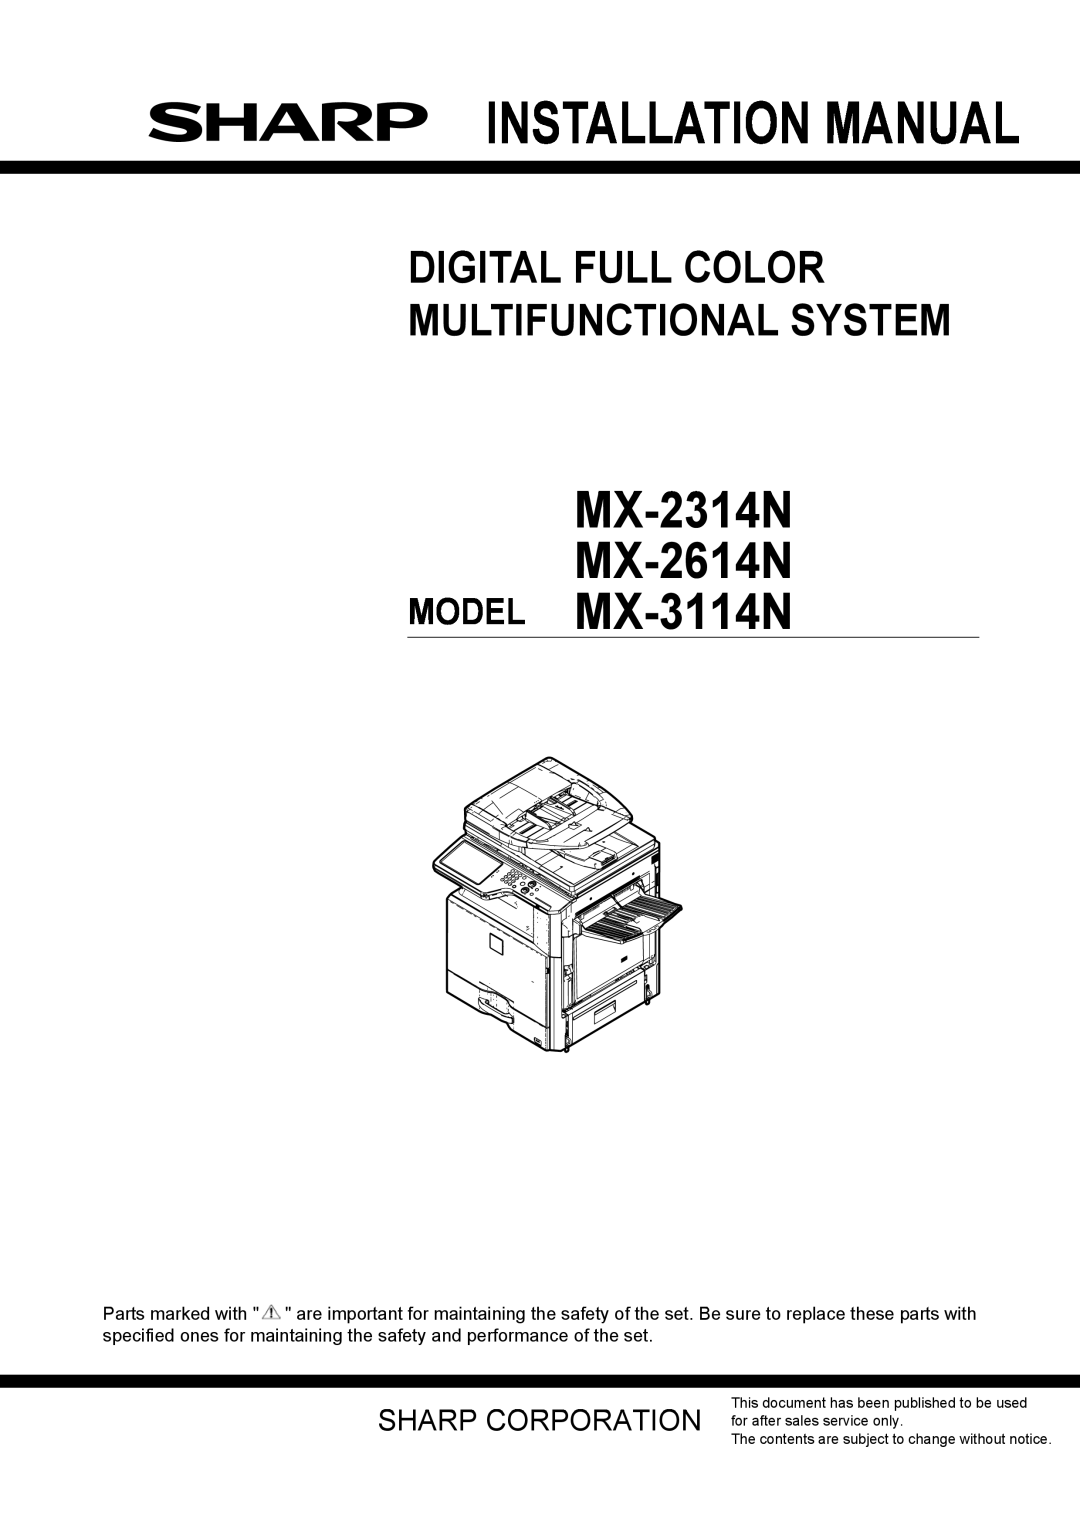 Sharp installation manual MX-2314N MX-2614N MODEL MX-3114N, Installation Manual 